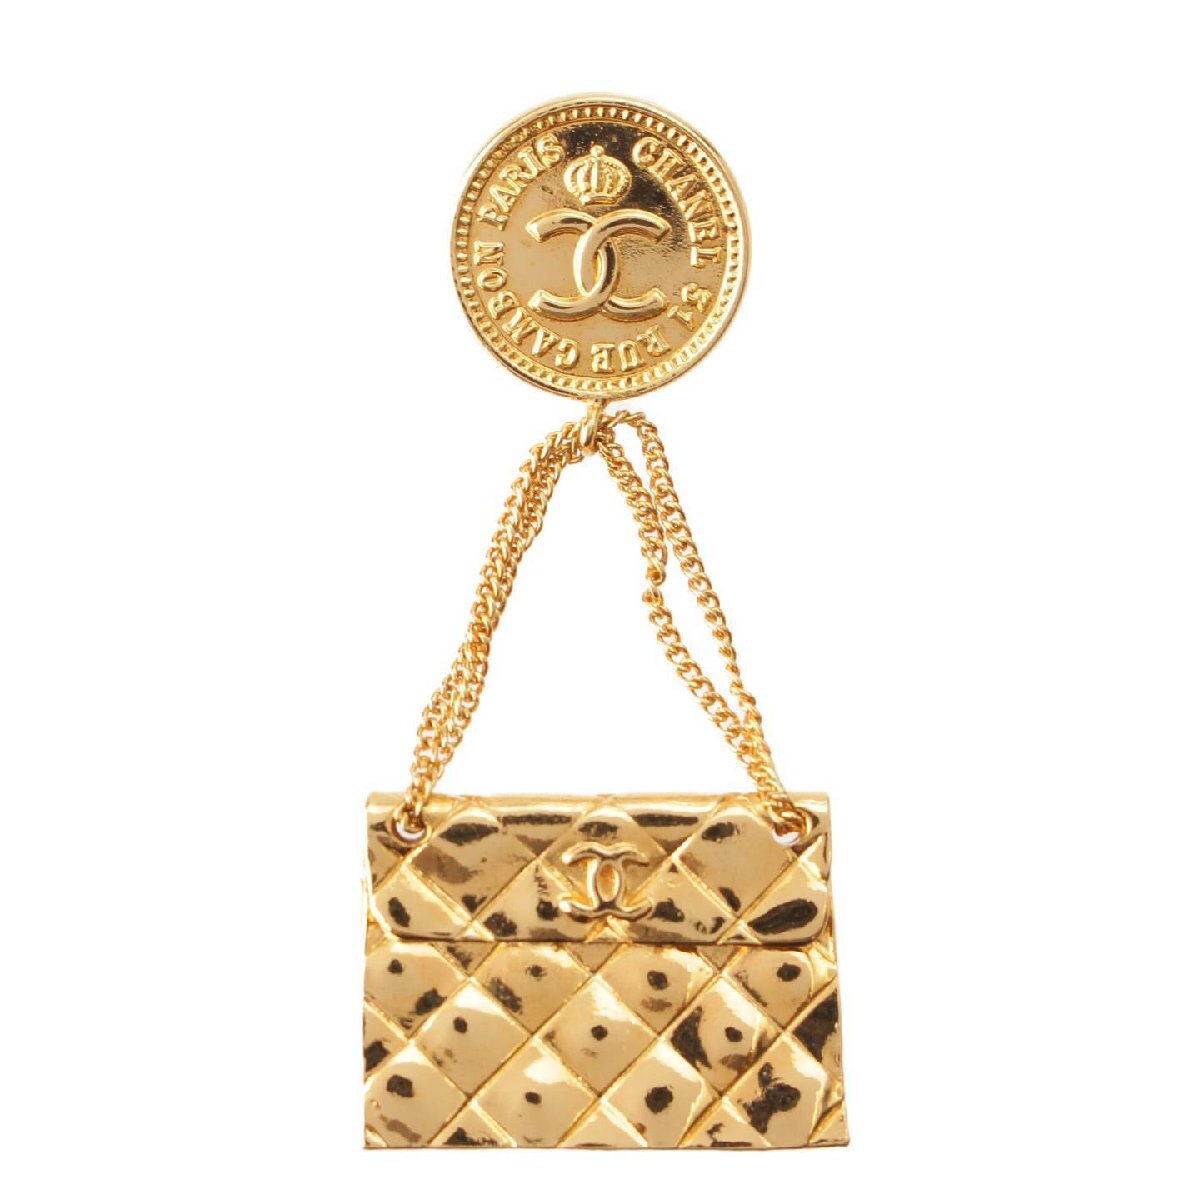 [ Chanel ]Chanel здесь Mark matelasse цепь сумка на плечо узор брошь Gold [ б/у ][ стандартный товар гарантия ]207191